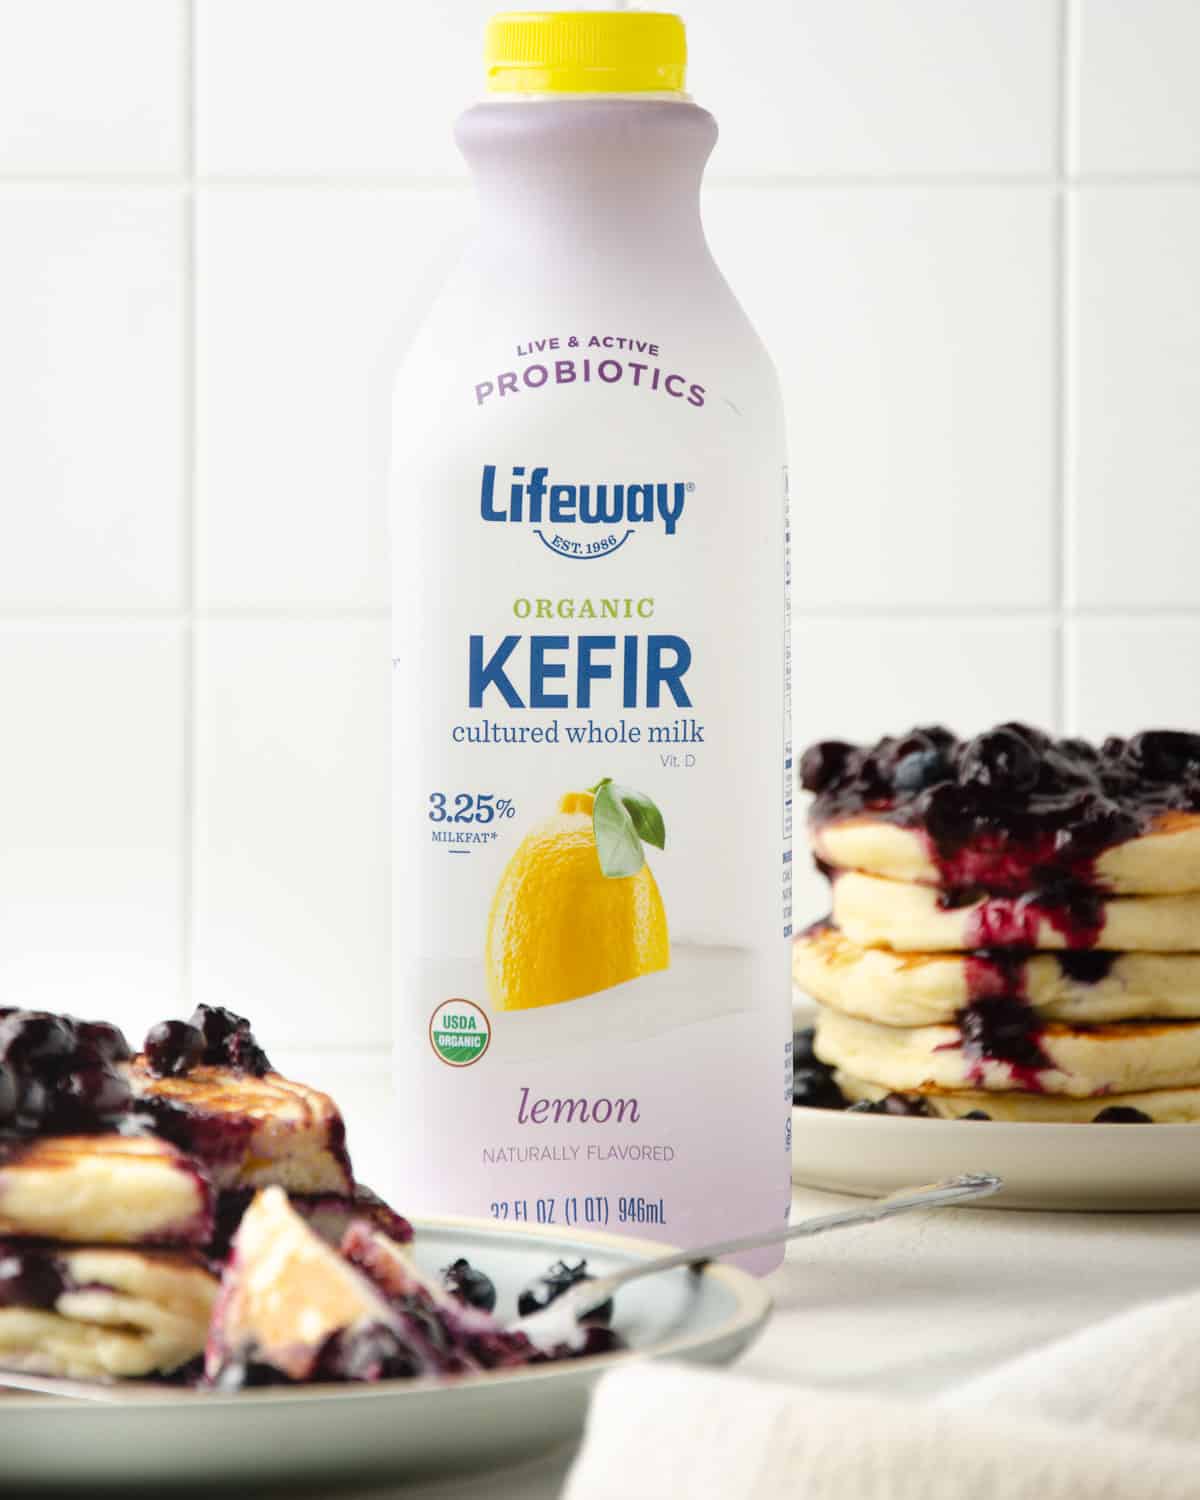 A bottle of Lifeway Kefir lemon flavored kefir milk among pancakes.